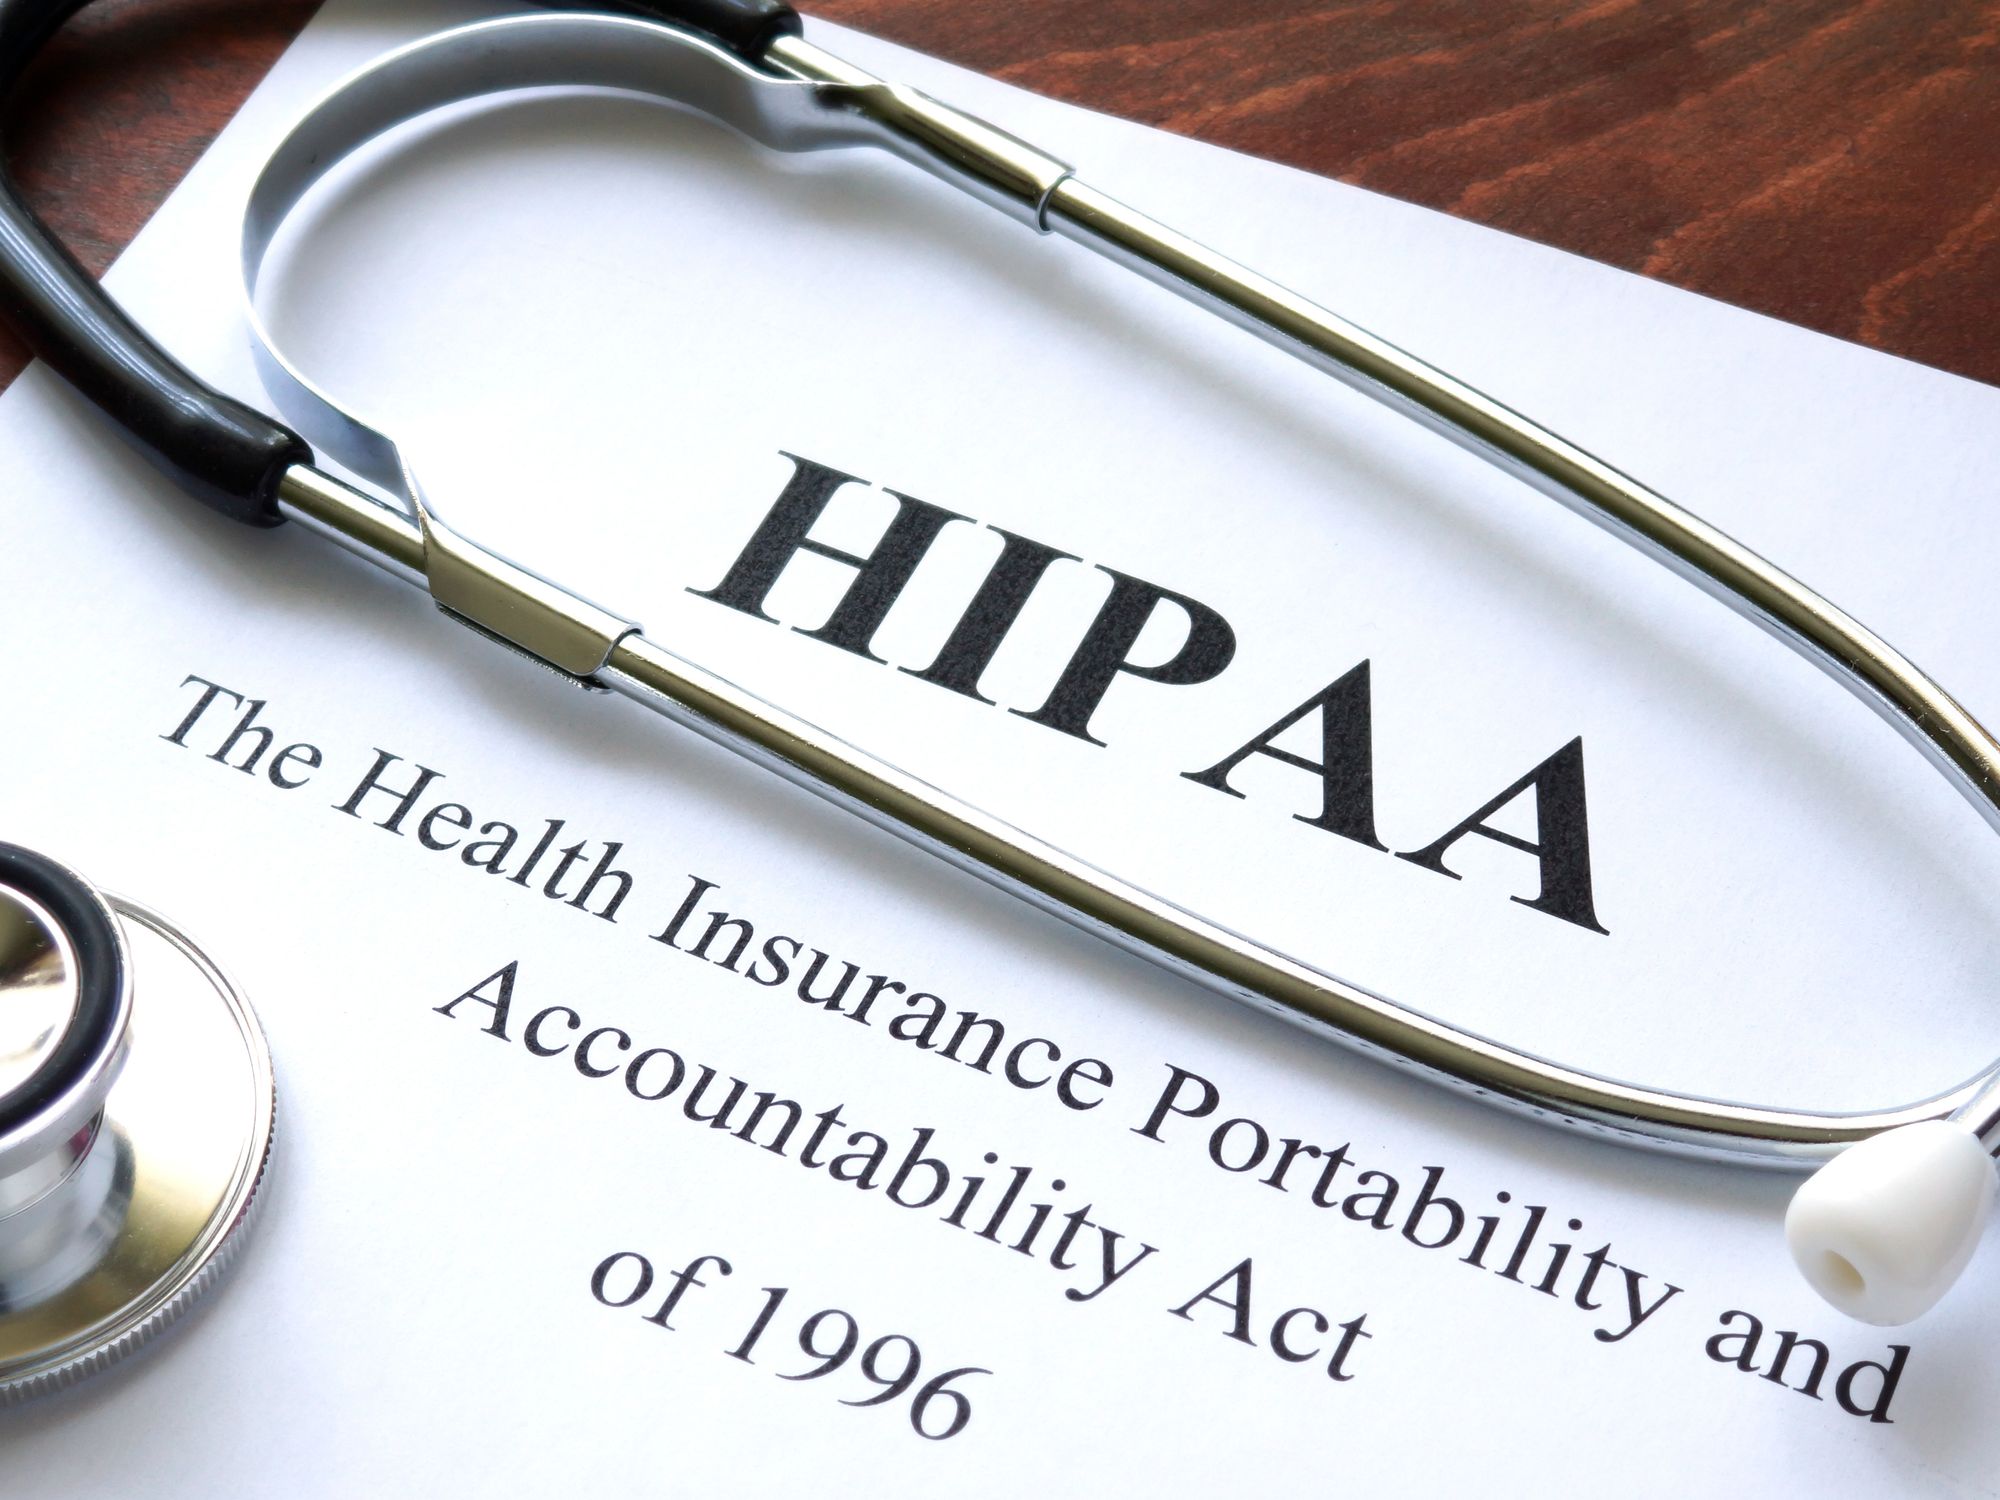 Employee rights under HIPAA/ACA